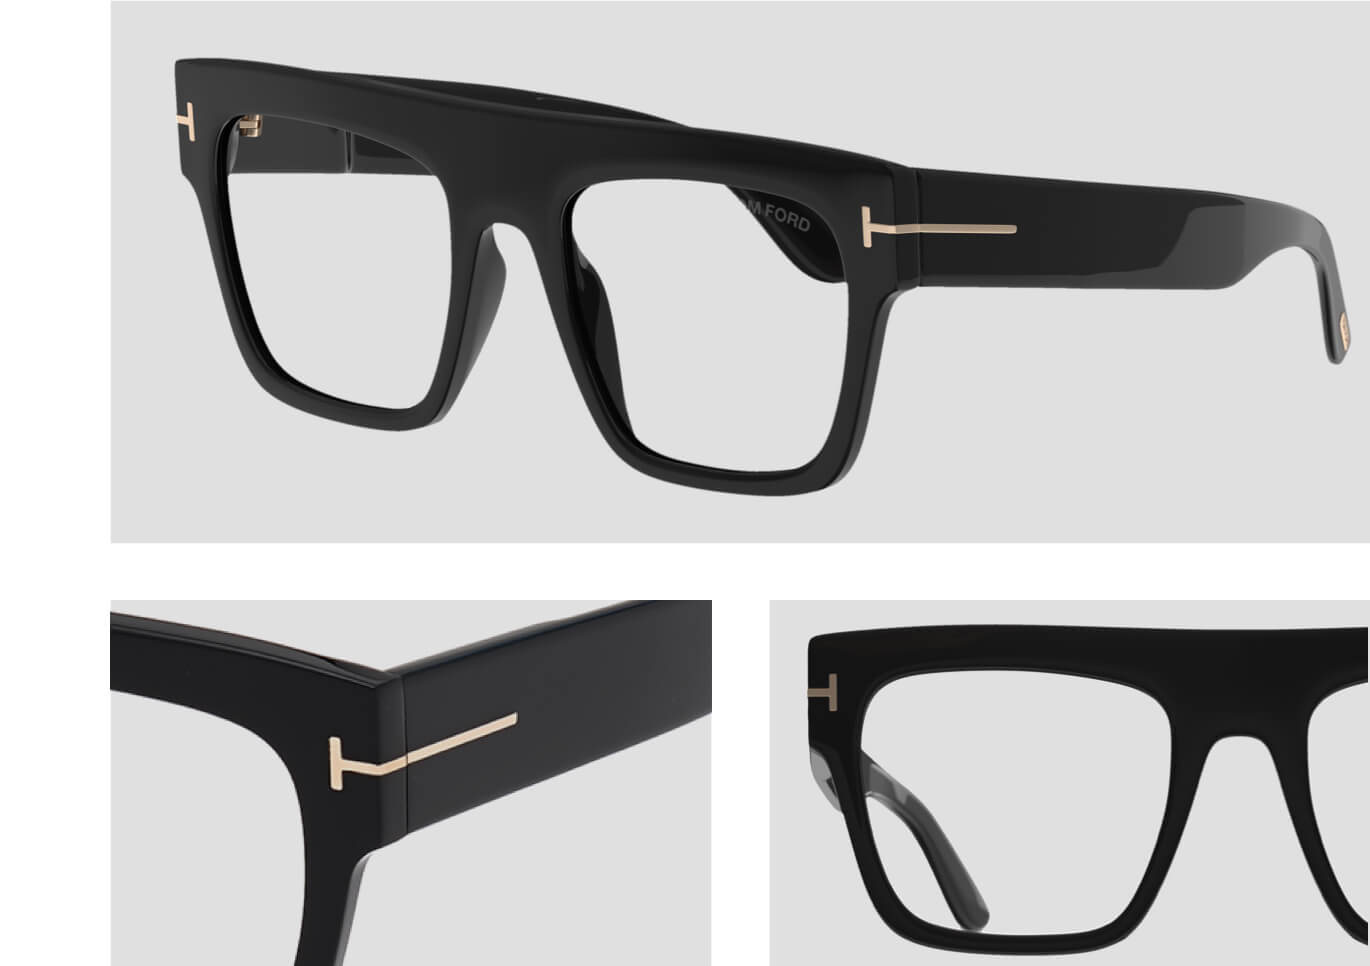 Tom Ford Eyewear | Glasses & Sunglasses | Vision Express